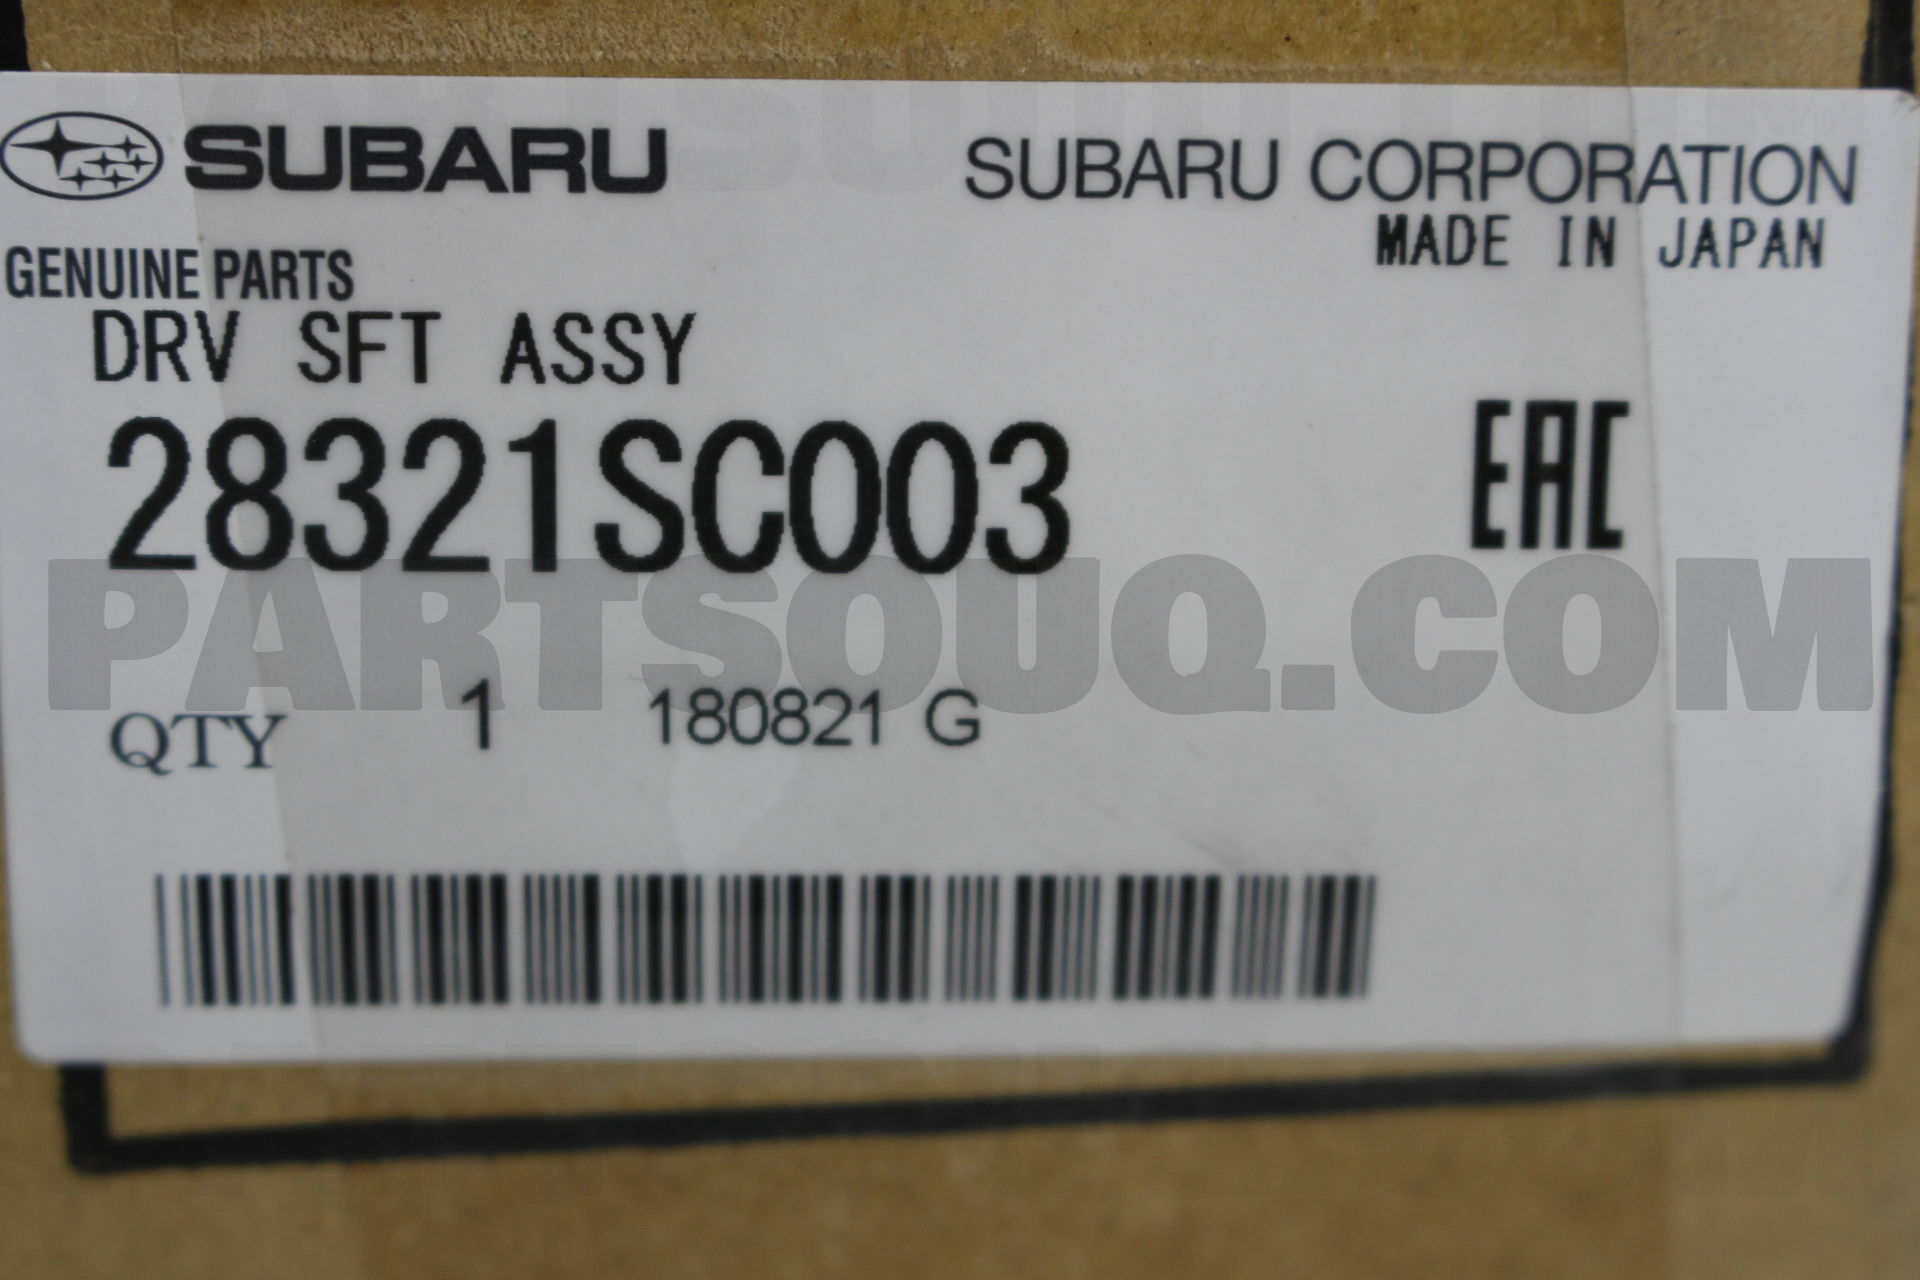 DRV SFT ASSY 28321SC003 | Subaru Parts | PartSouq